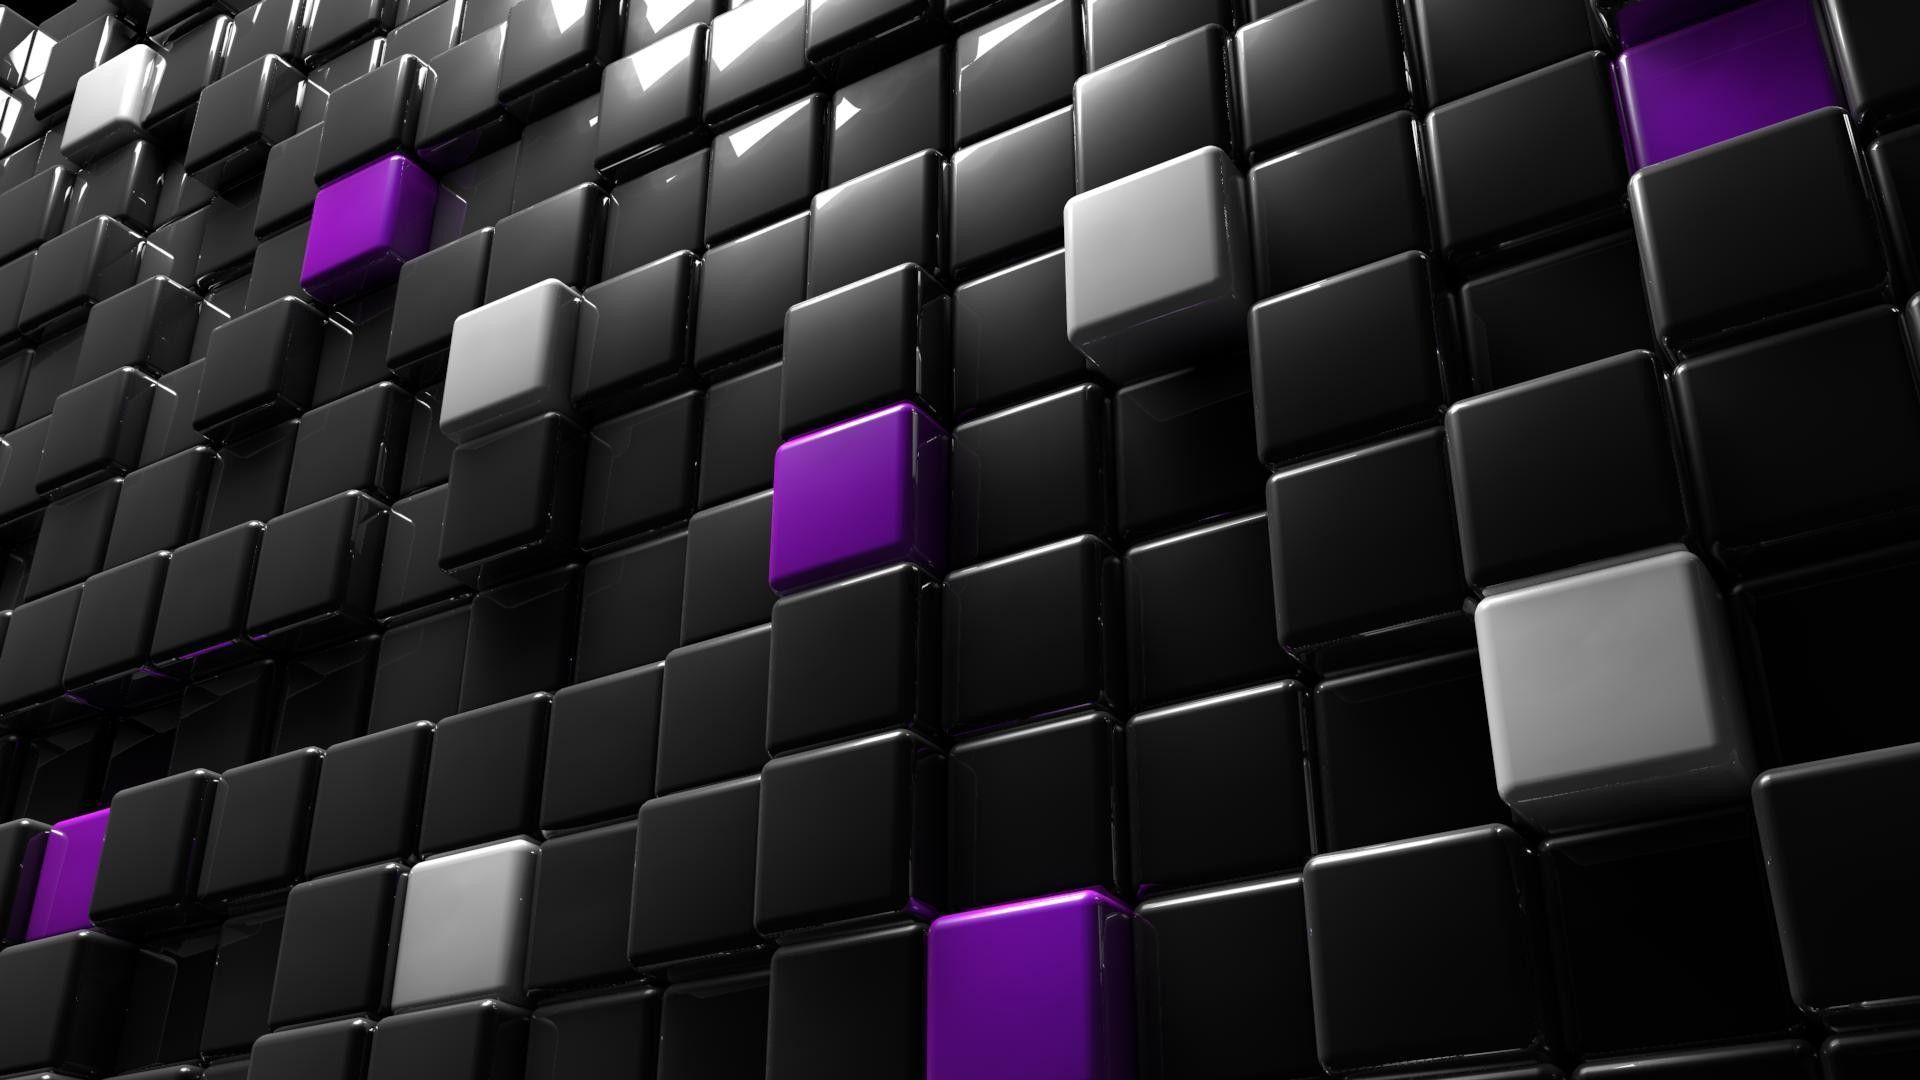 3D Cube Live Wallpaper APK (Android App) - Free Download